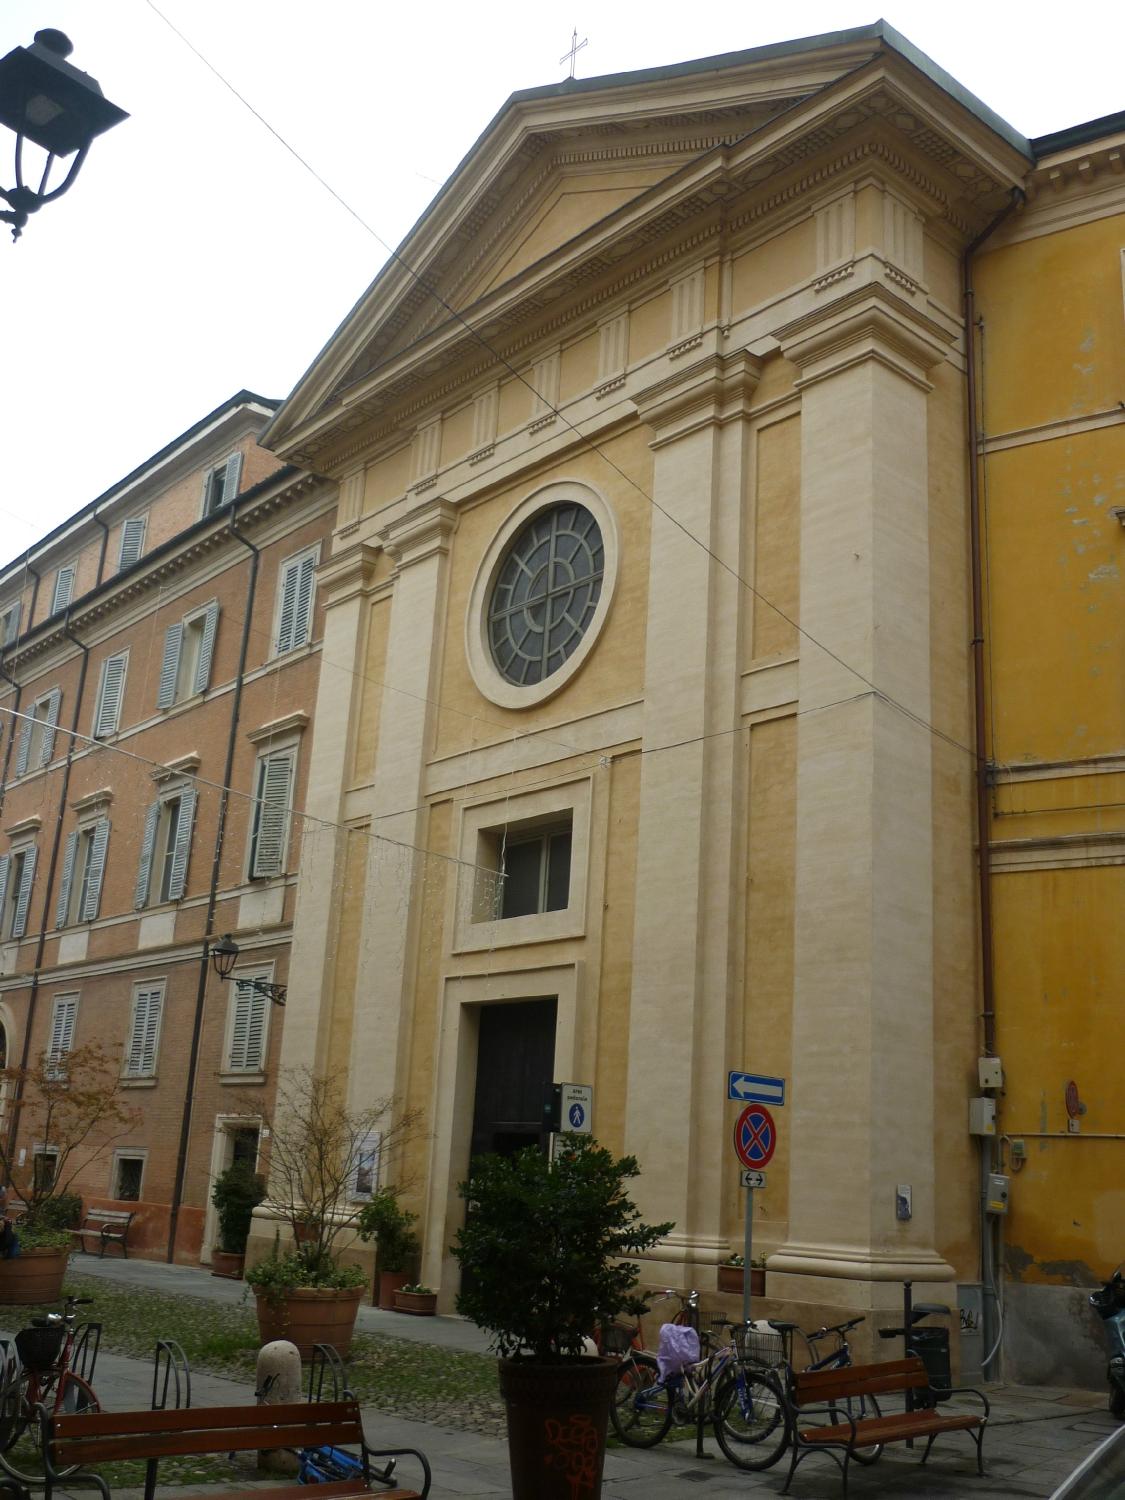 Chiesa di Sant'Eufemia